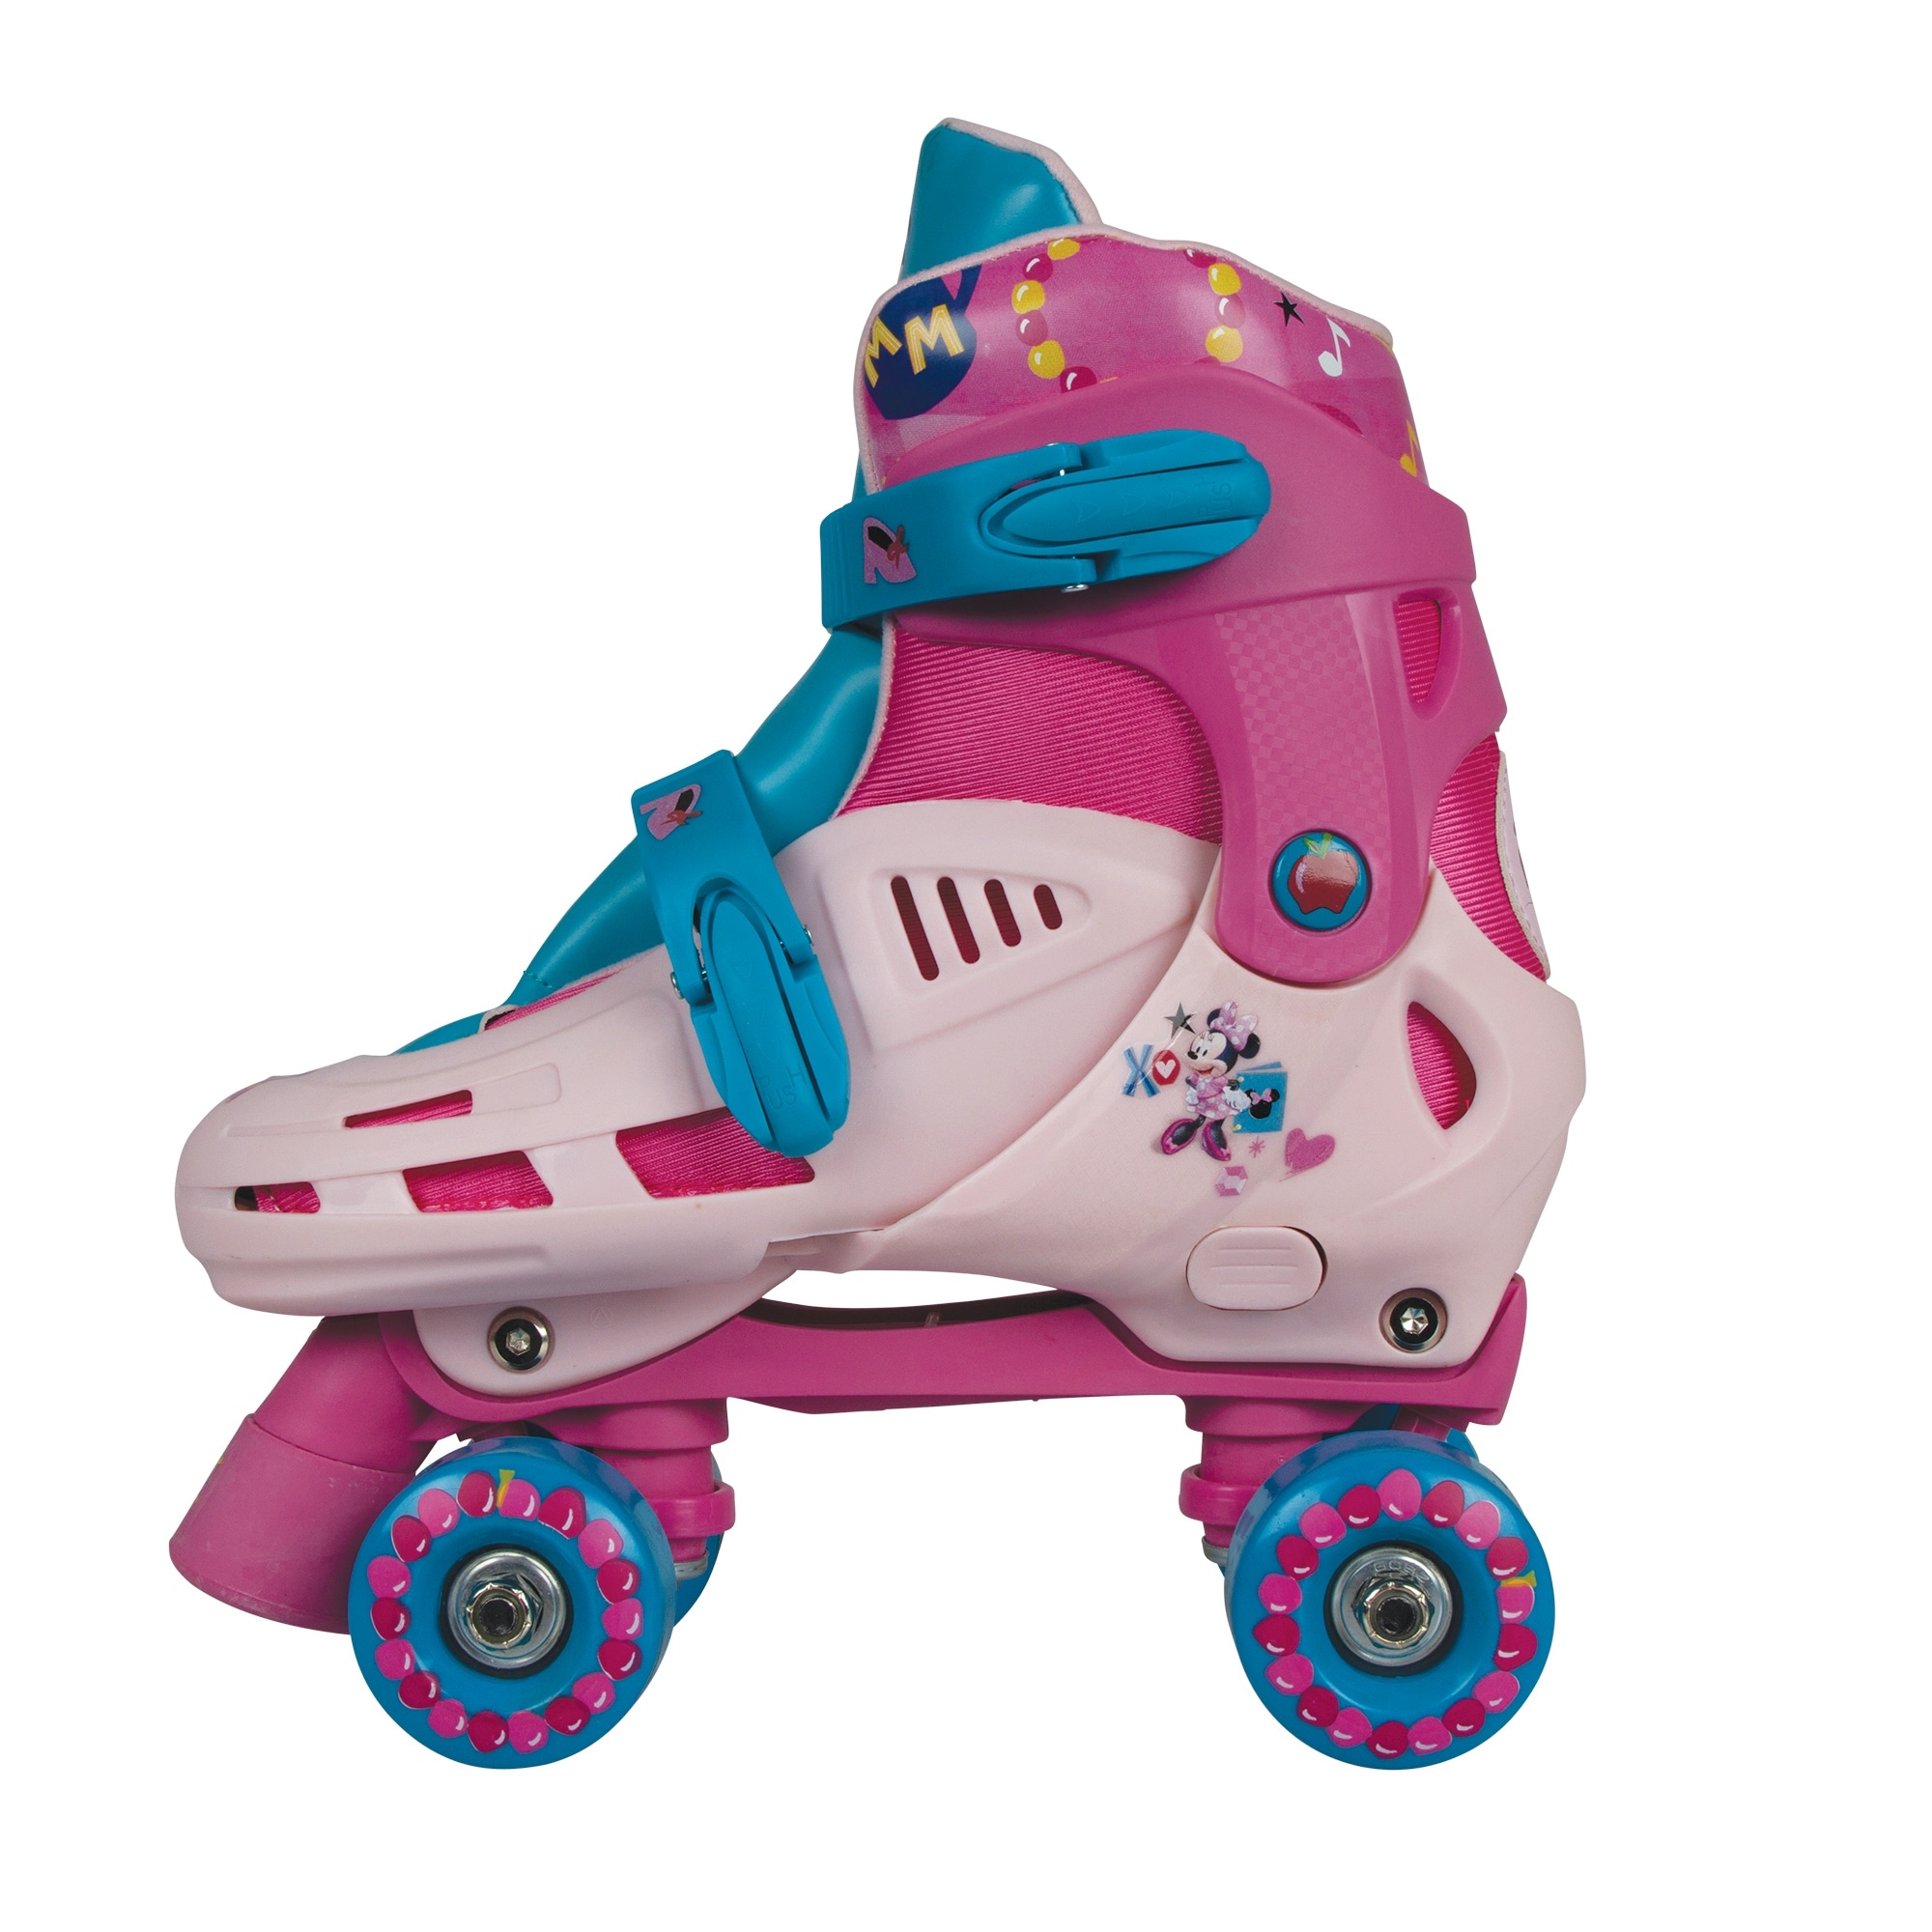 Playwheel PJ Masks Beginner Quad Roller Skates with Toe Brake 4X Adjustable